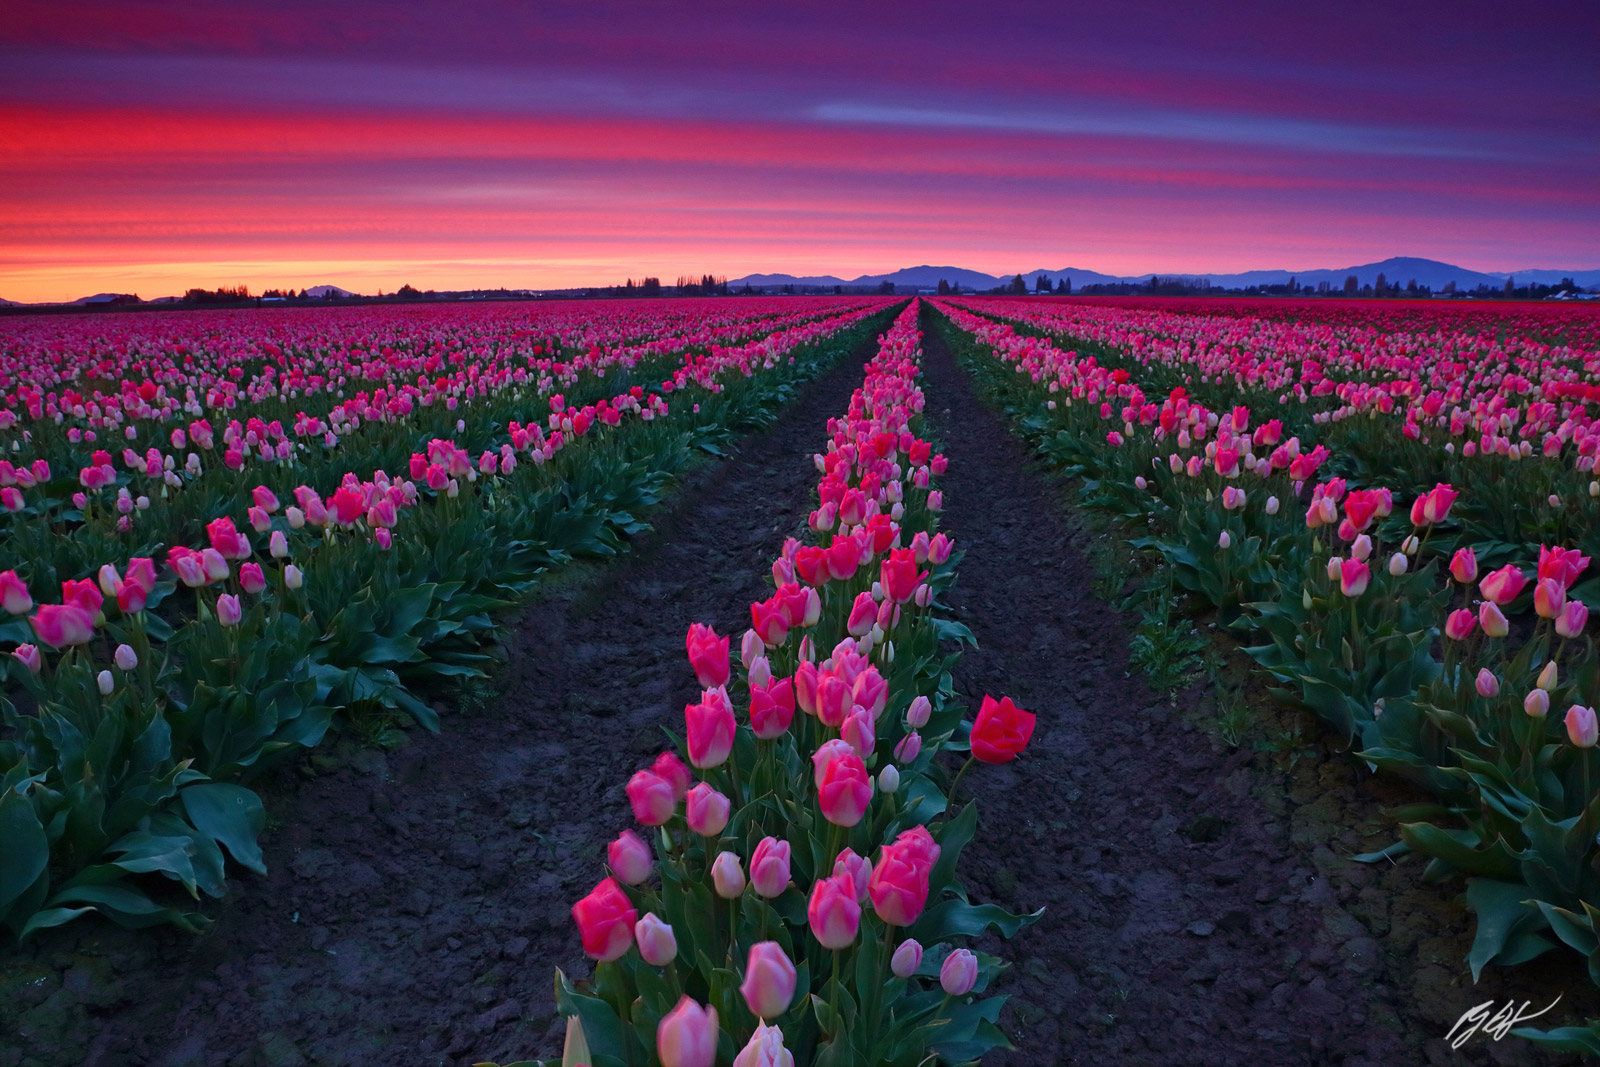 Sunset over Tulip Fields C/O Roozengaarde, in Skagit Valley in Washington